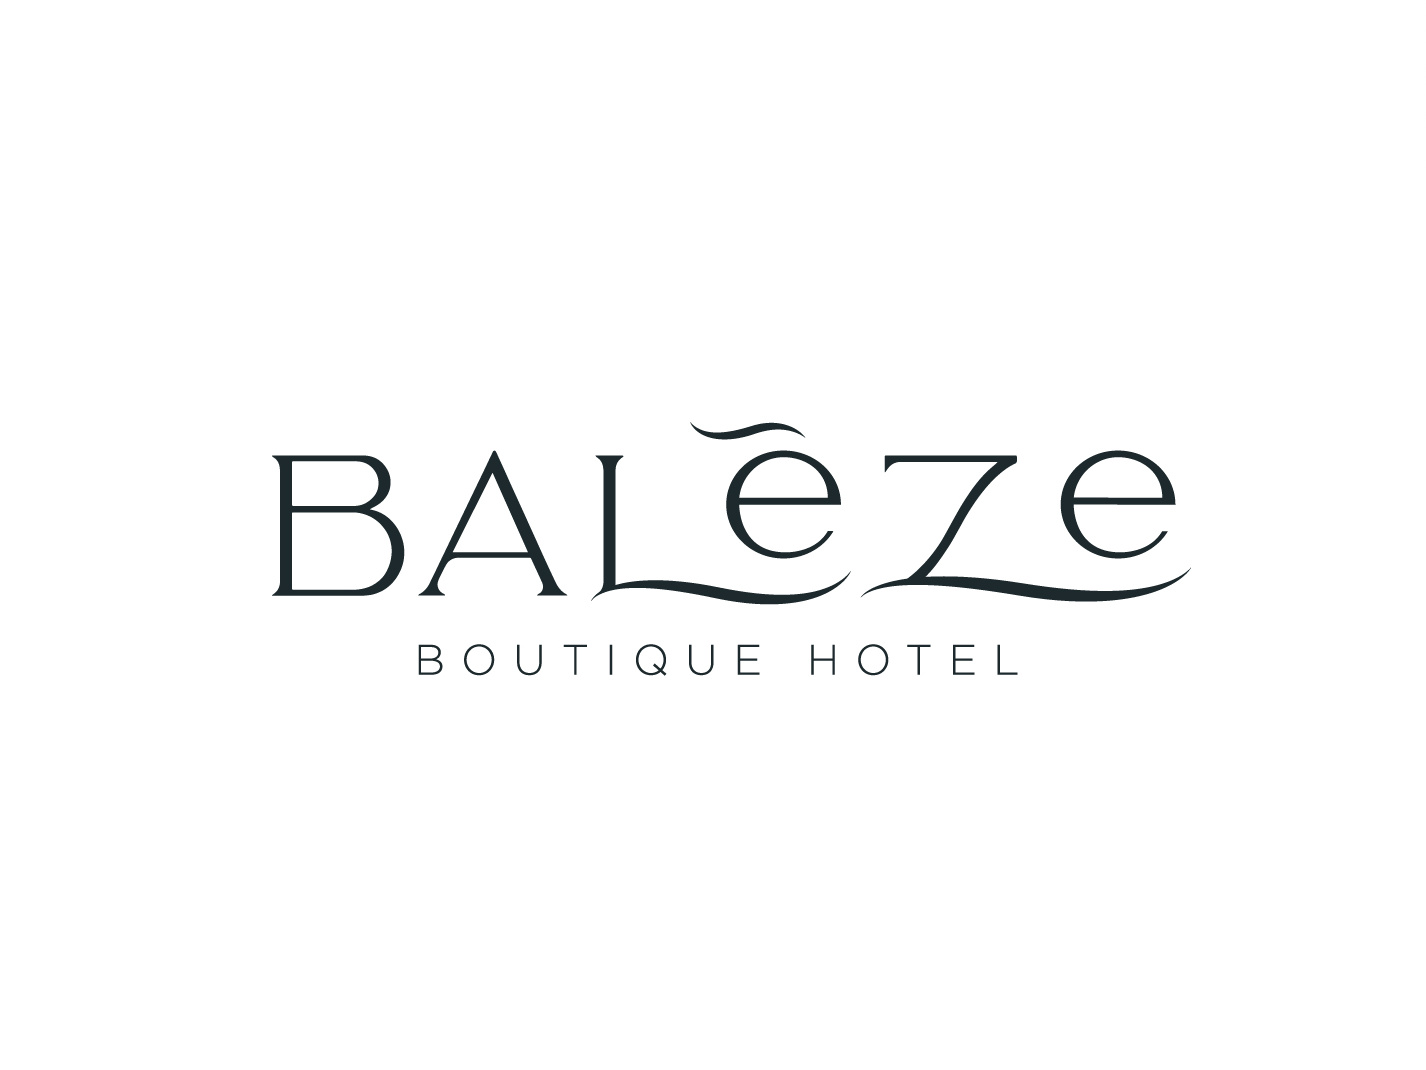 Baleze Boutique Hotel Logo&Branding by Senem Demirayak on Dribbble